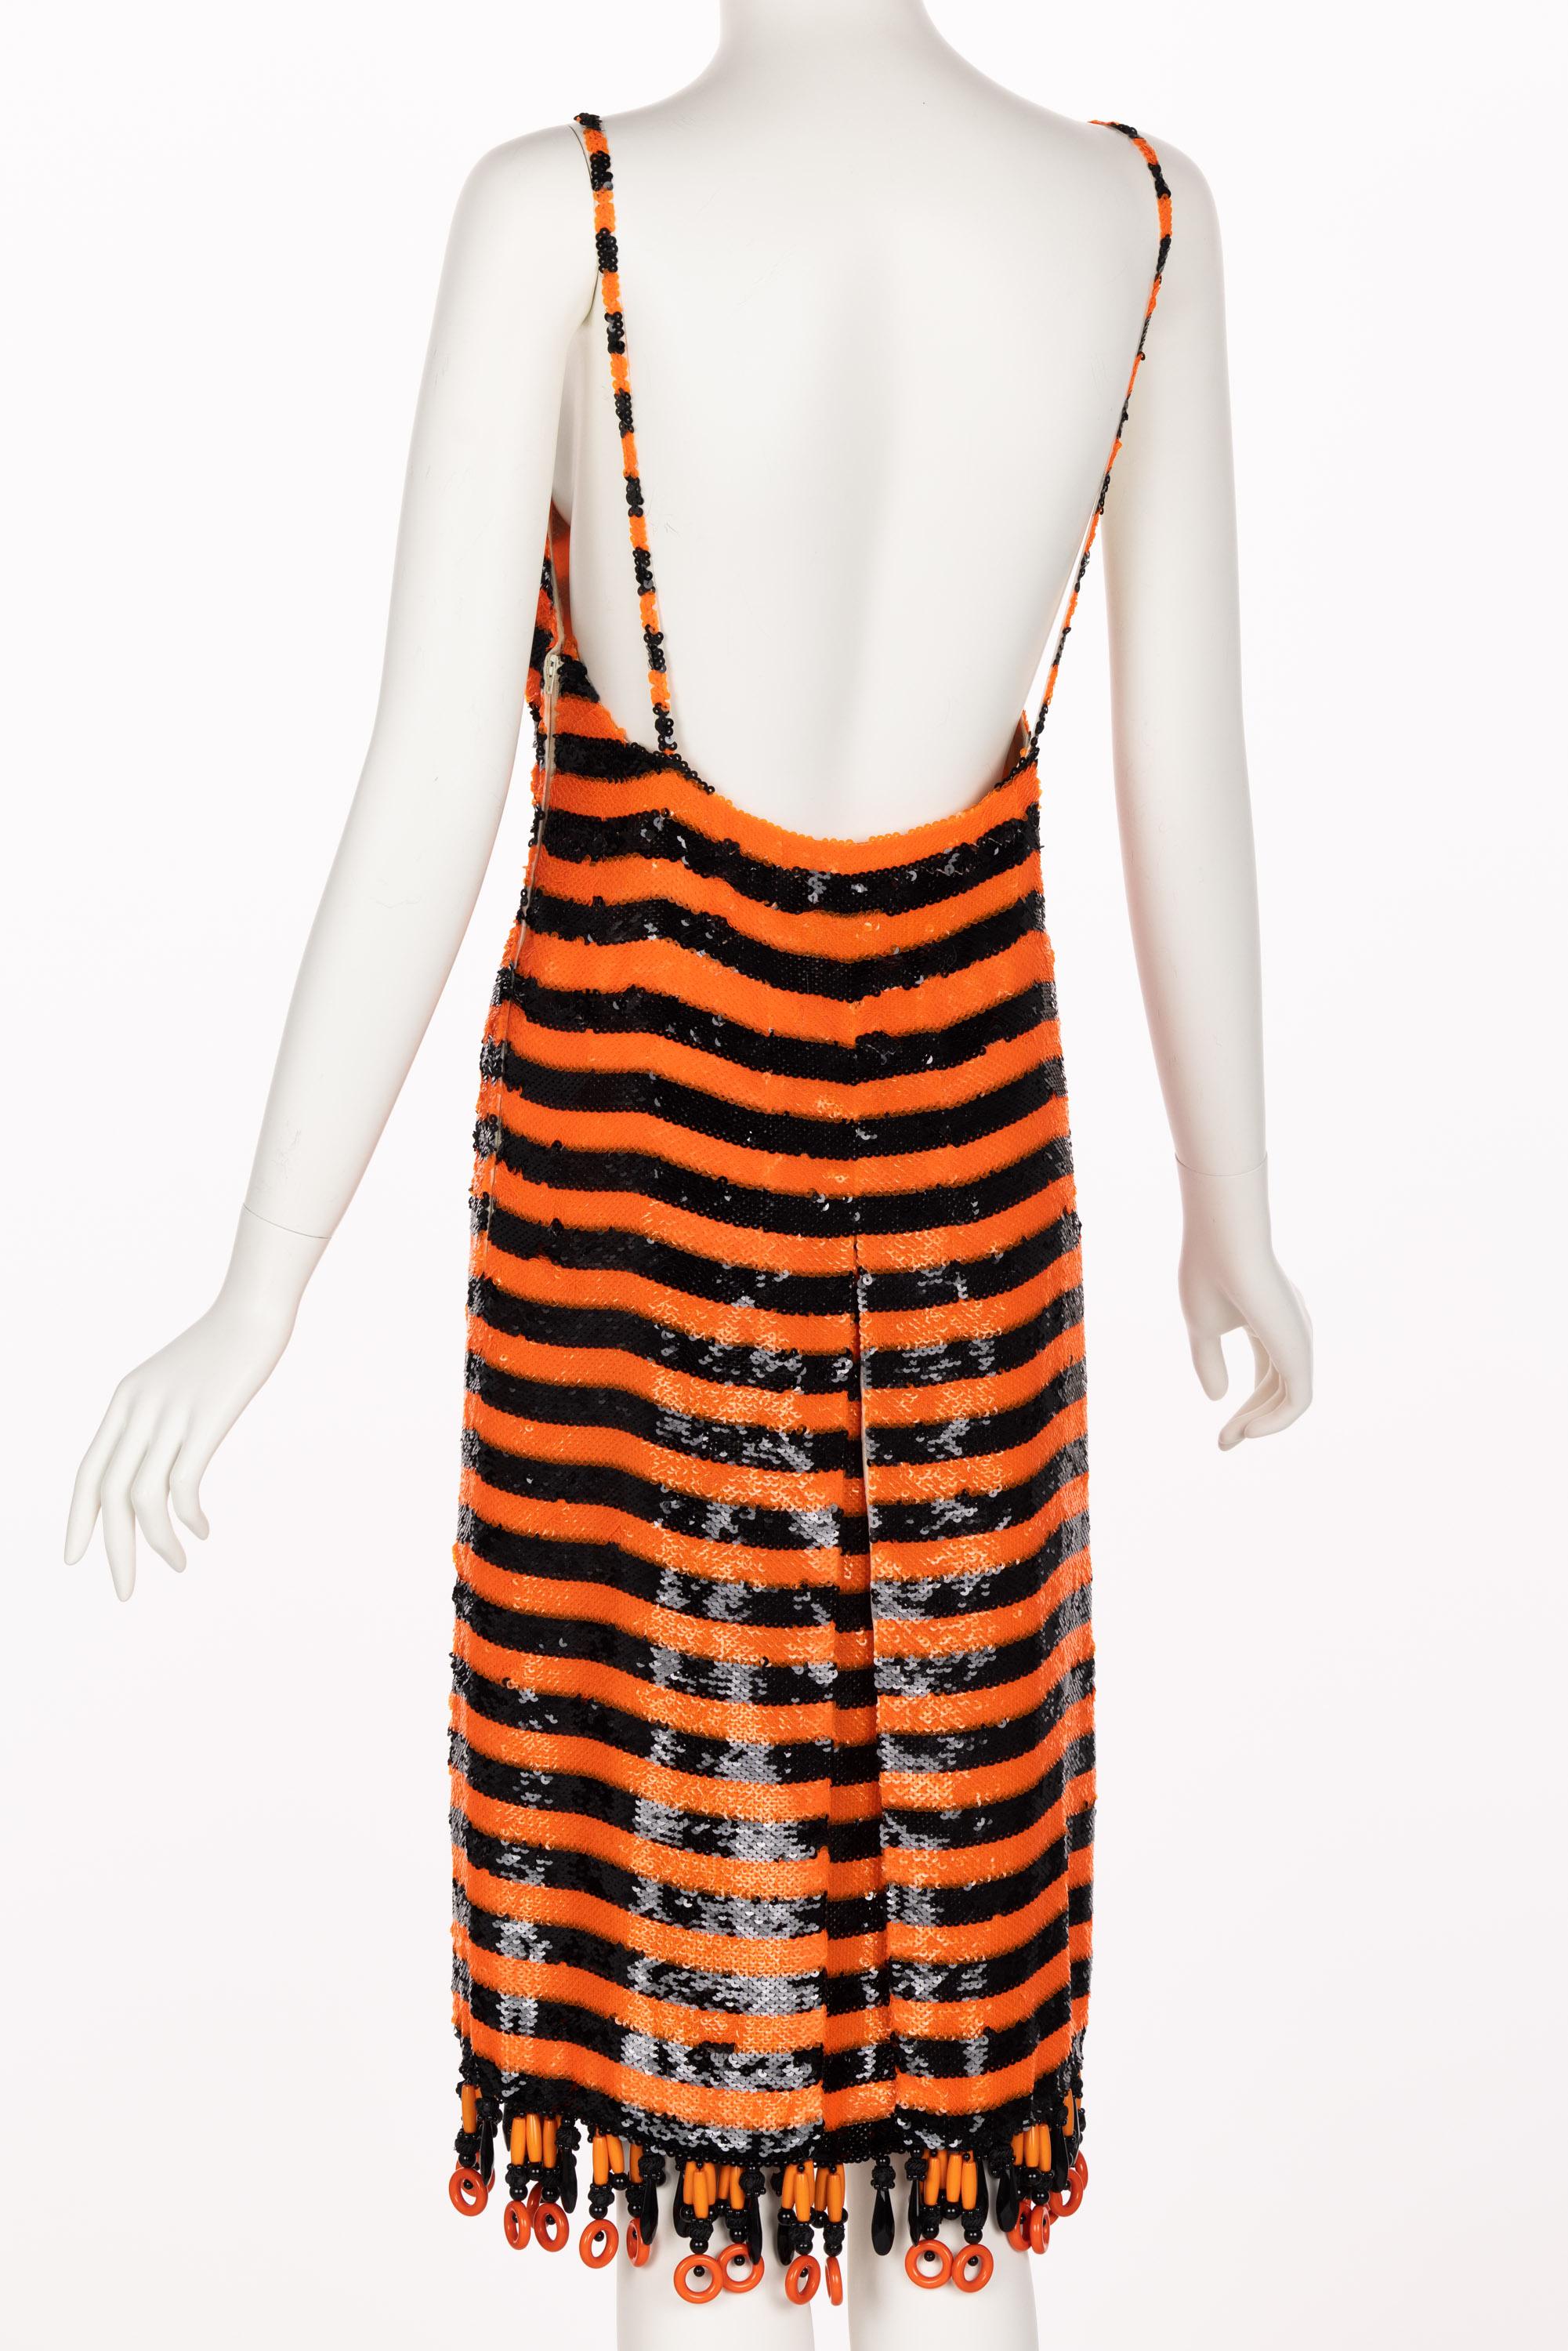 Prada Orange Black Sequin Flapper Dress S/S 2011 Beijing Limited Edition  In Excellent Condition For Sale In Boca Raton, FL